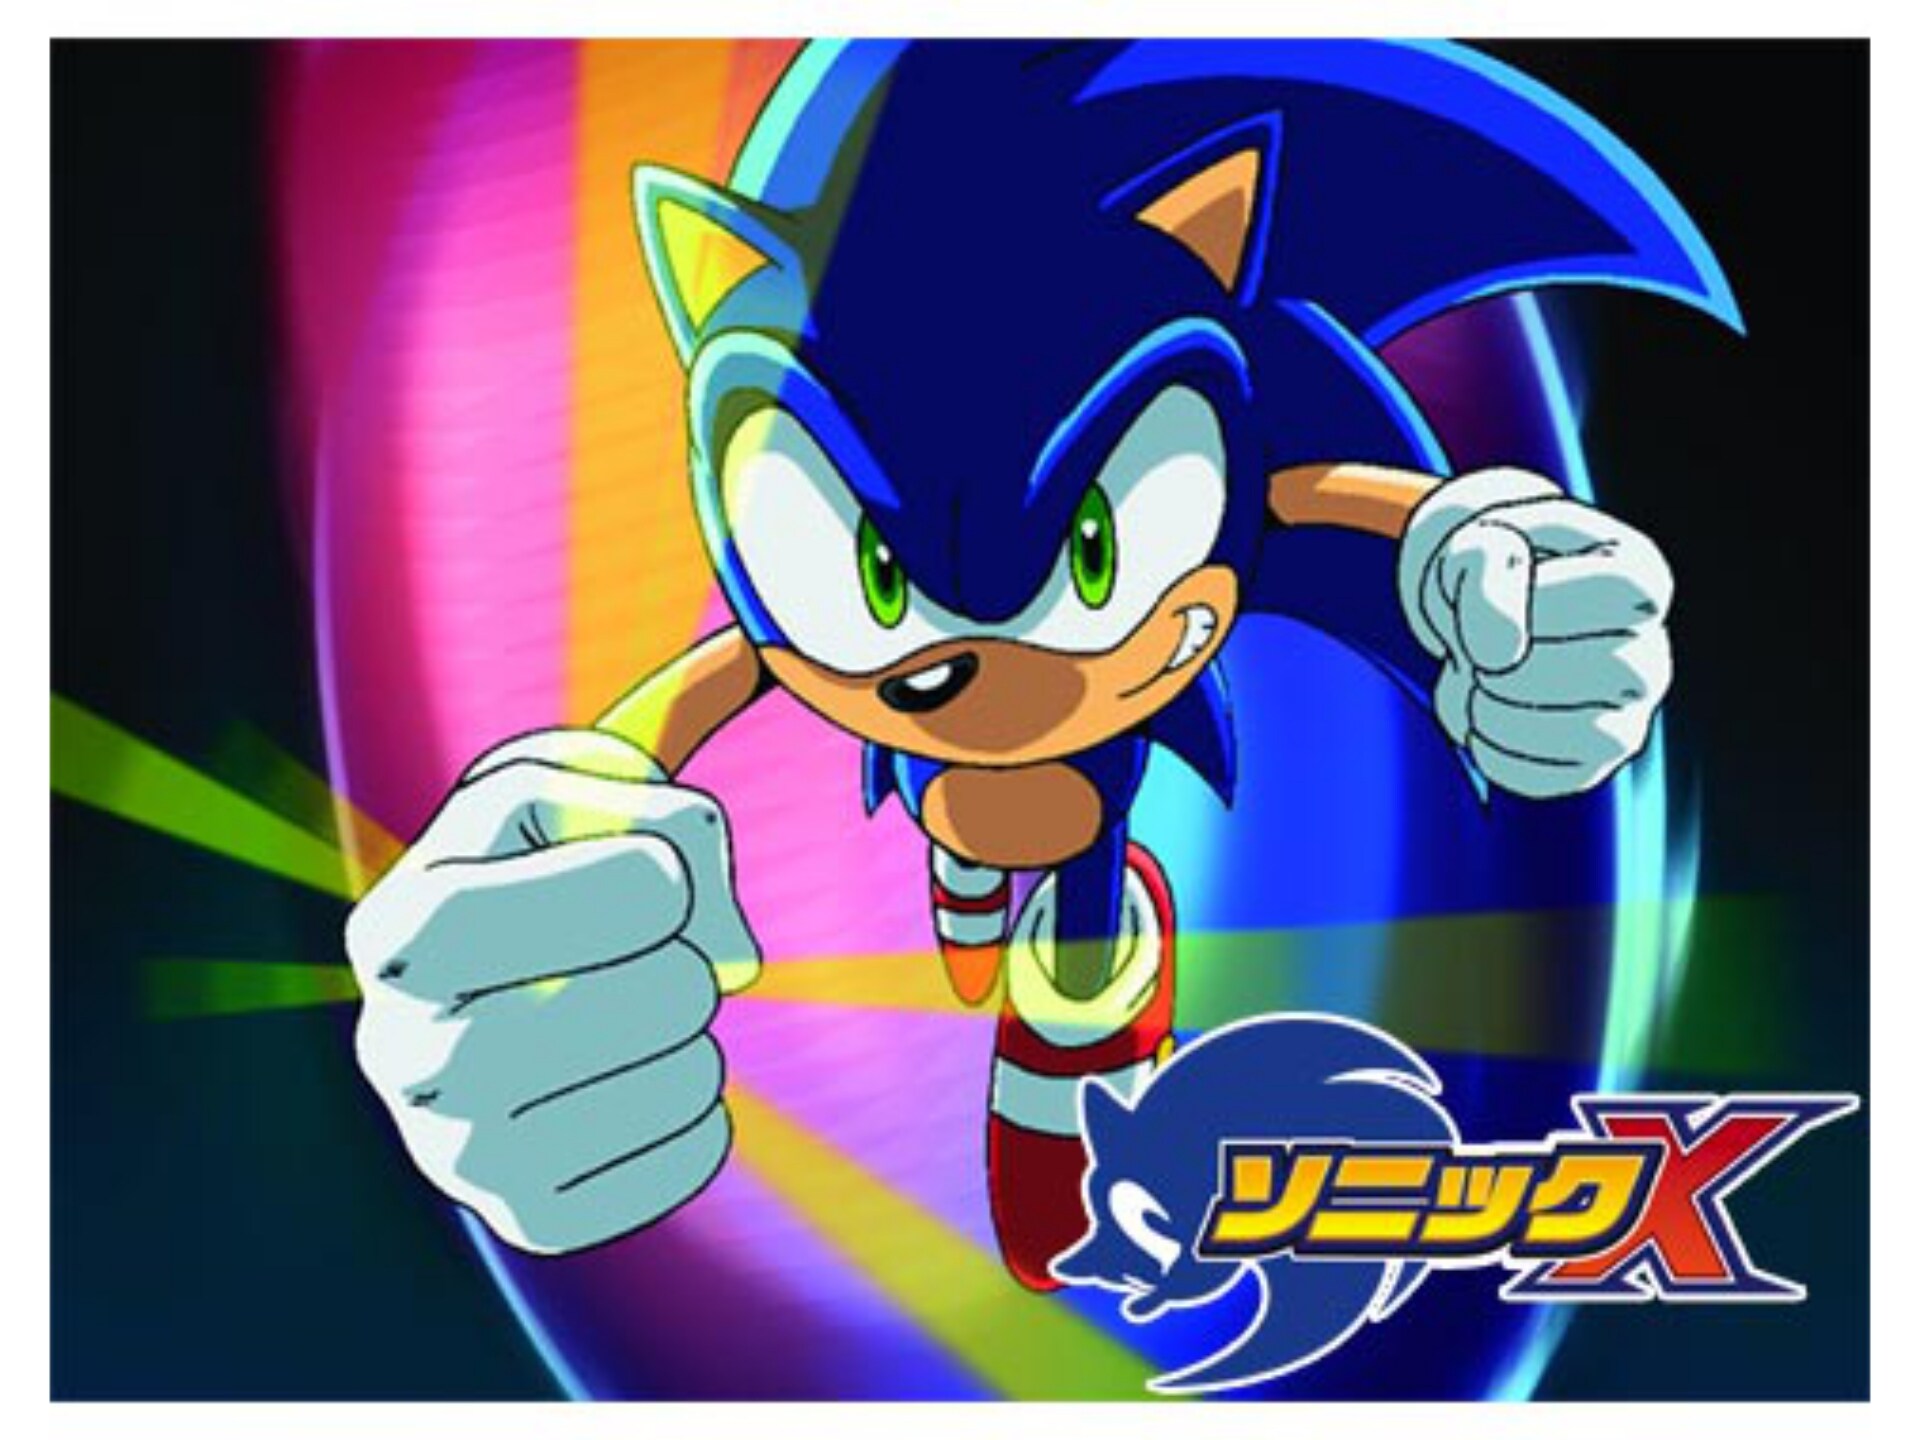 Sonic X 54 58のまとめフル動画 初月無料 動画配信サービスのビデオマーケット